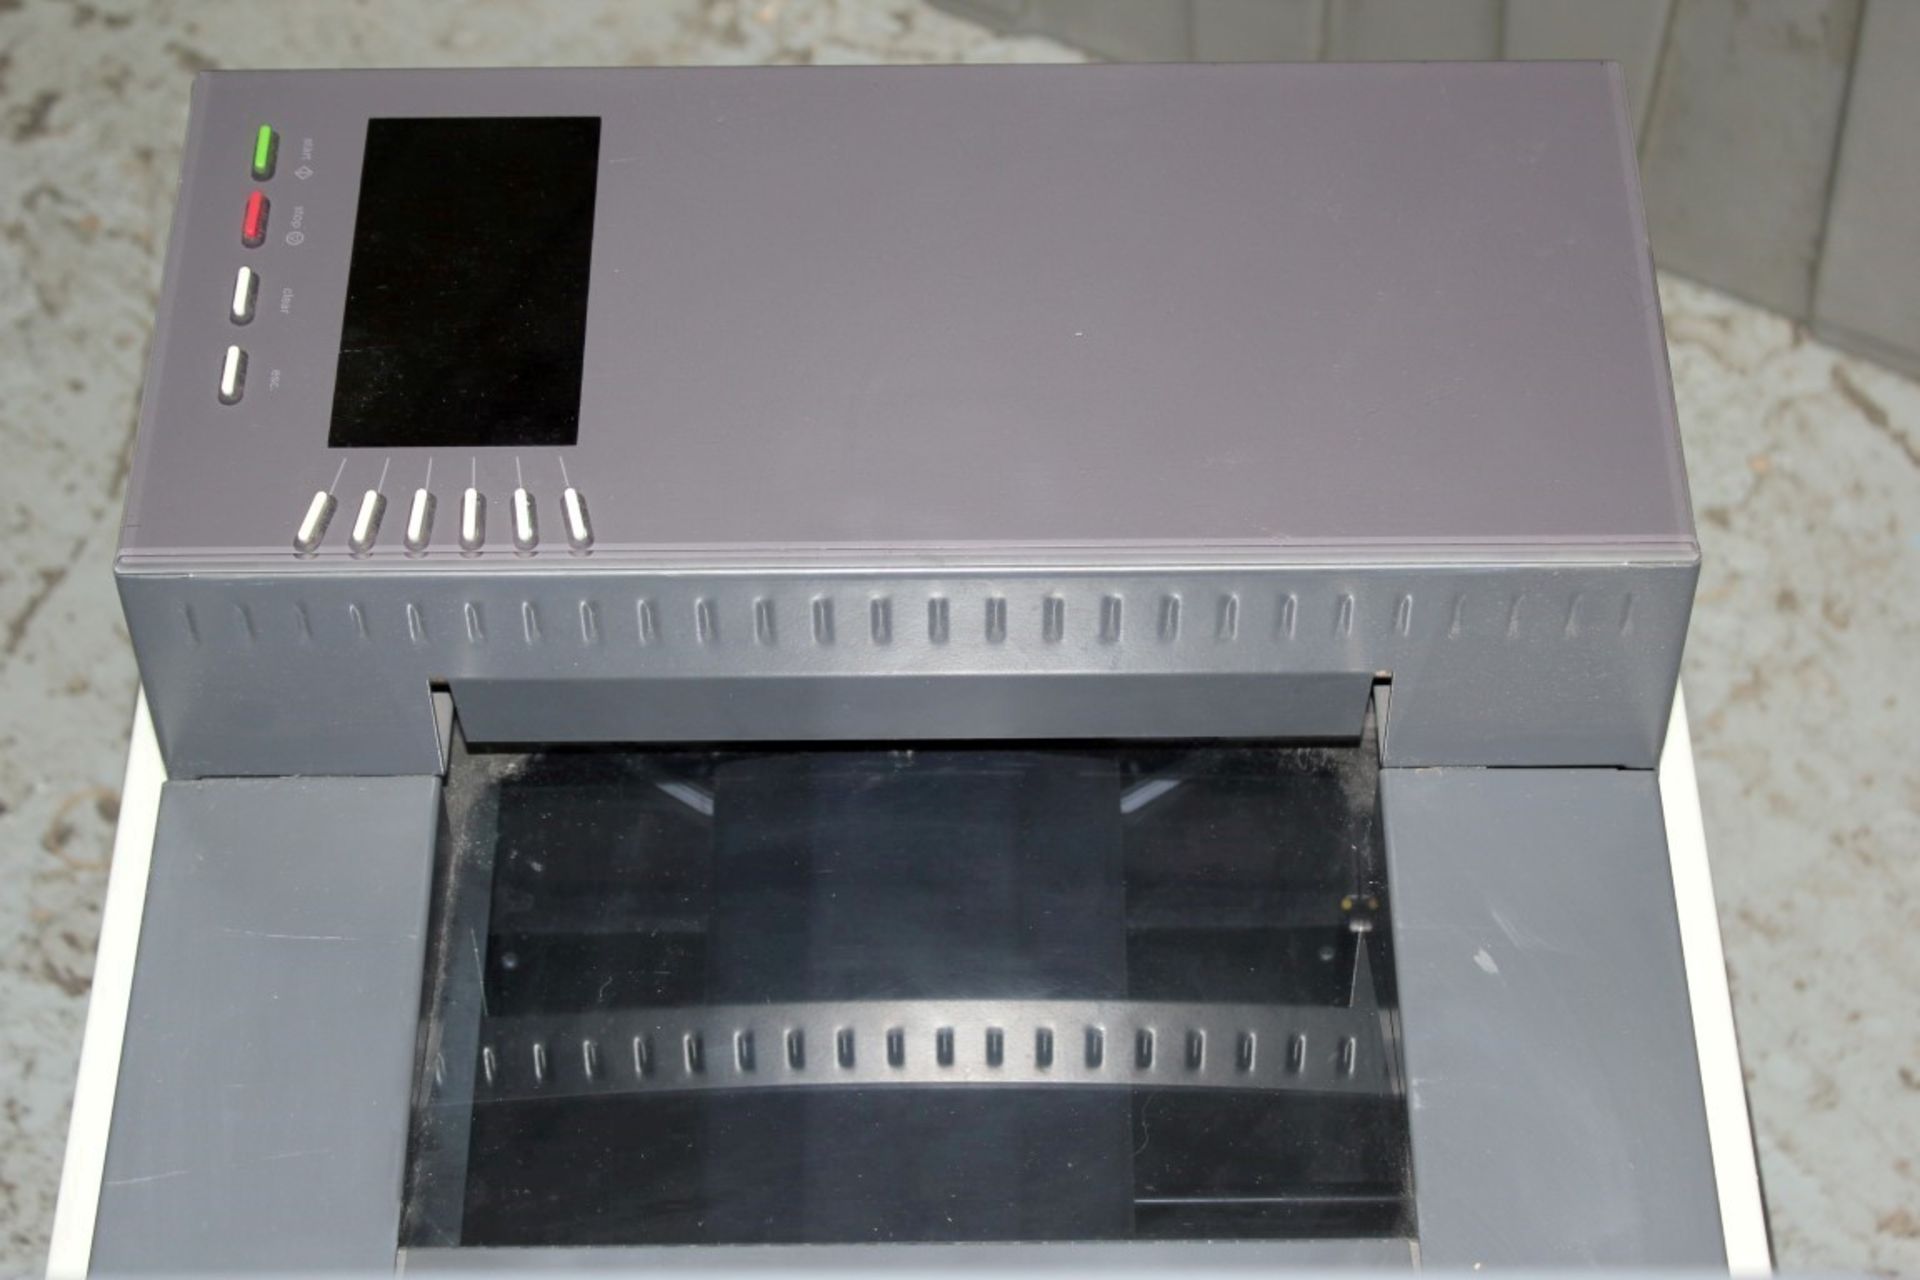 1 x Francotyp-Postalia Franking Machine - Sold As Seen - CL011 - Location: Altrincham WA14 Item - Image 3 of 6